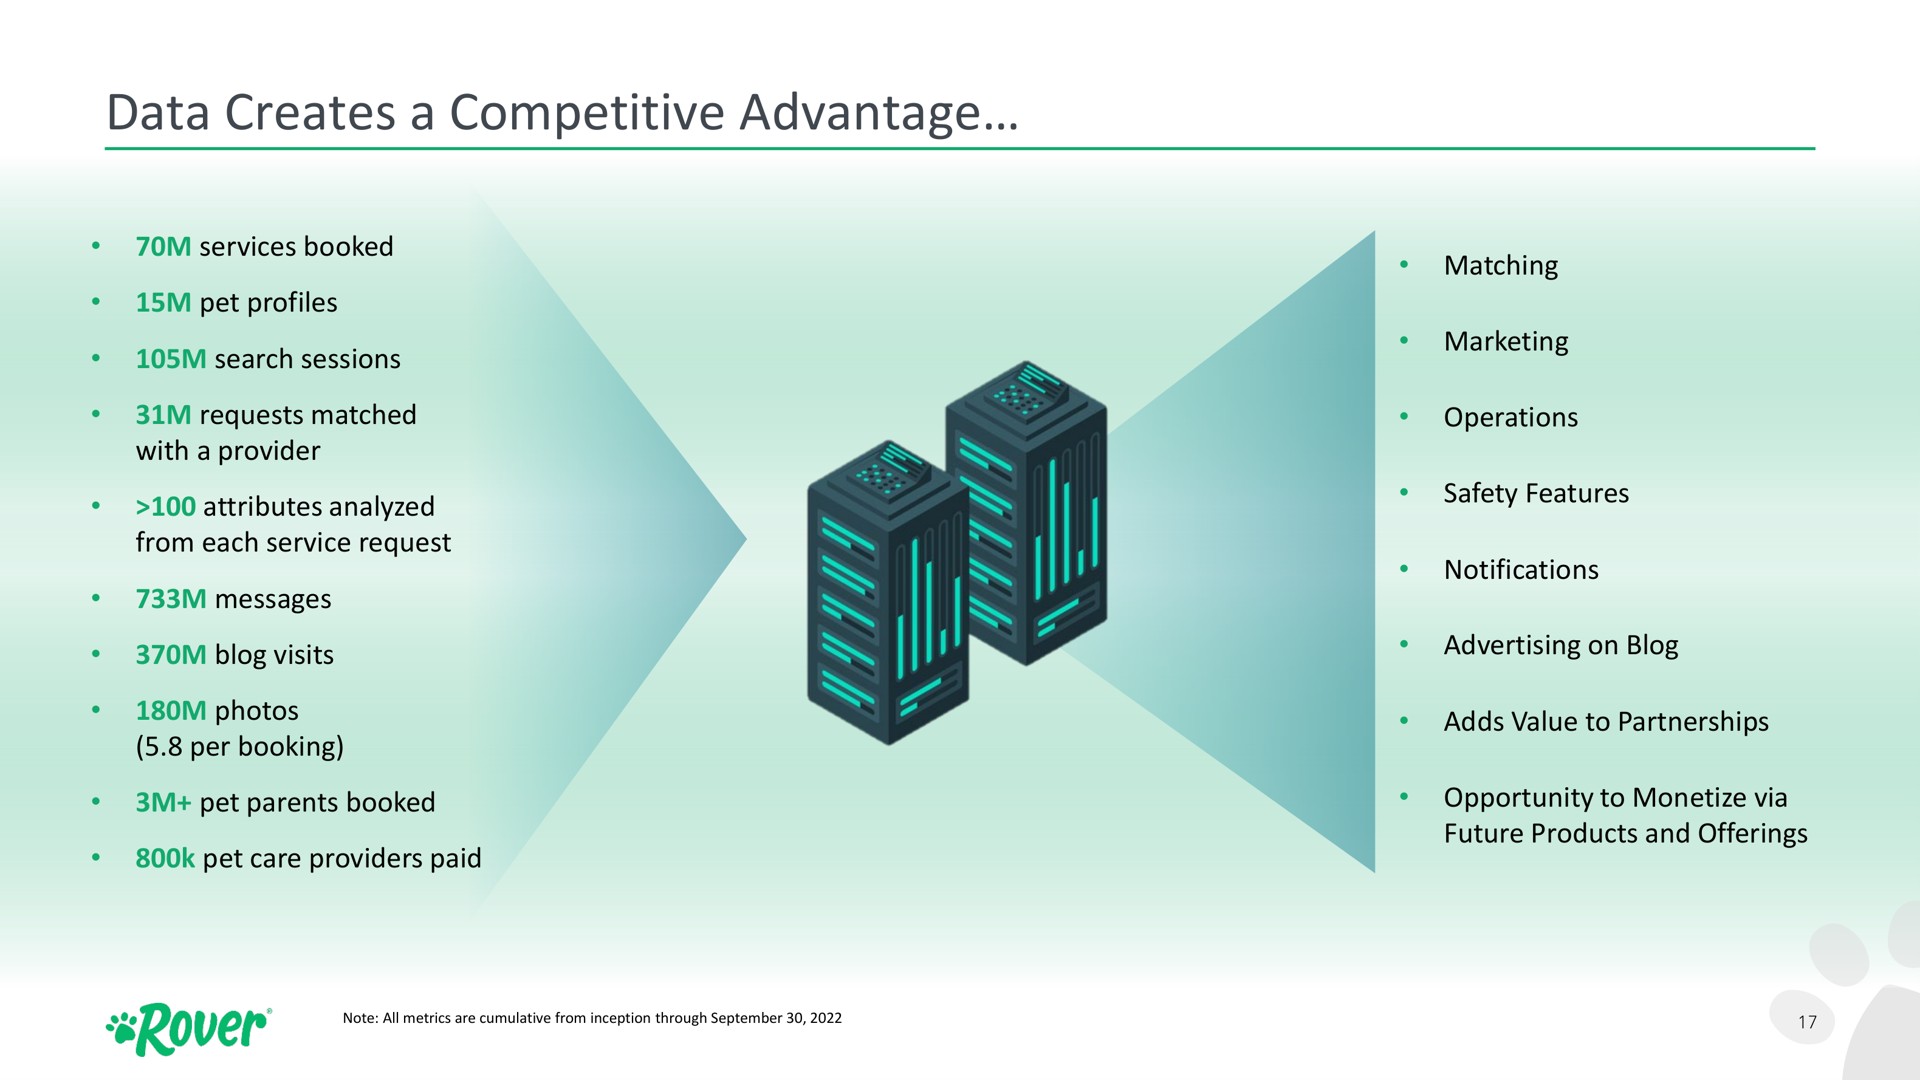 data creates a competitive advantage | Rover